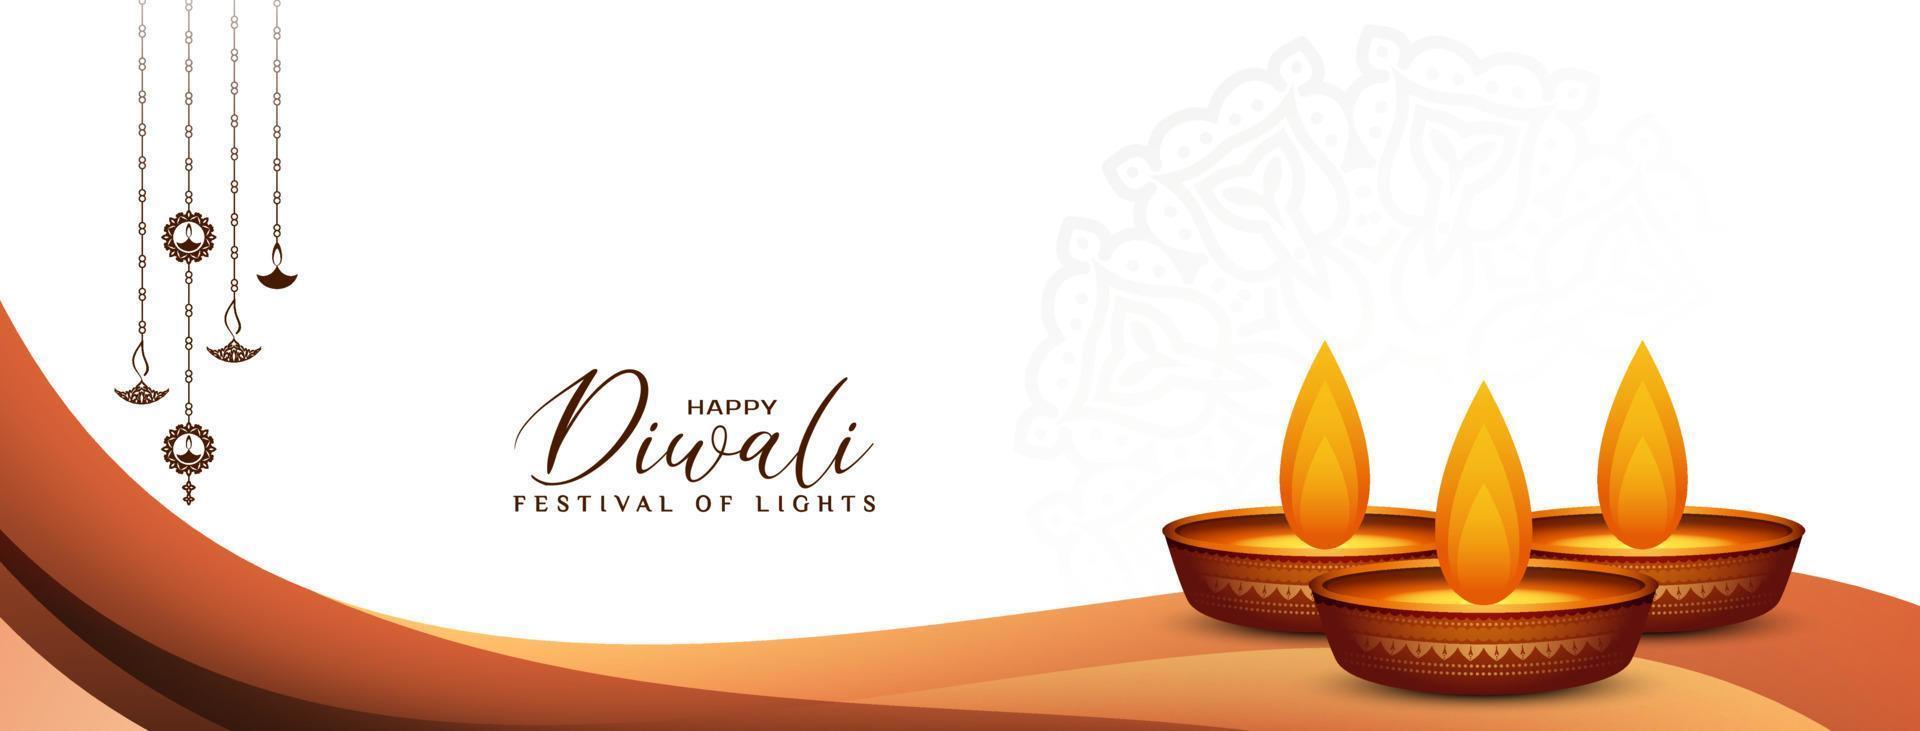 Happy Diwali cultural religious Indian festival banner design ...